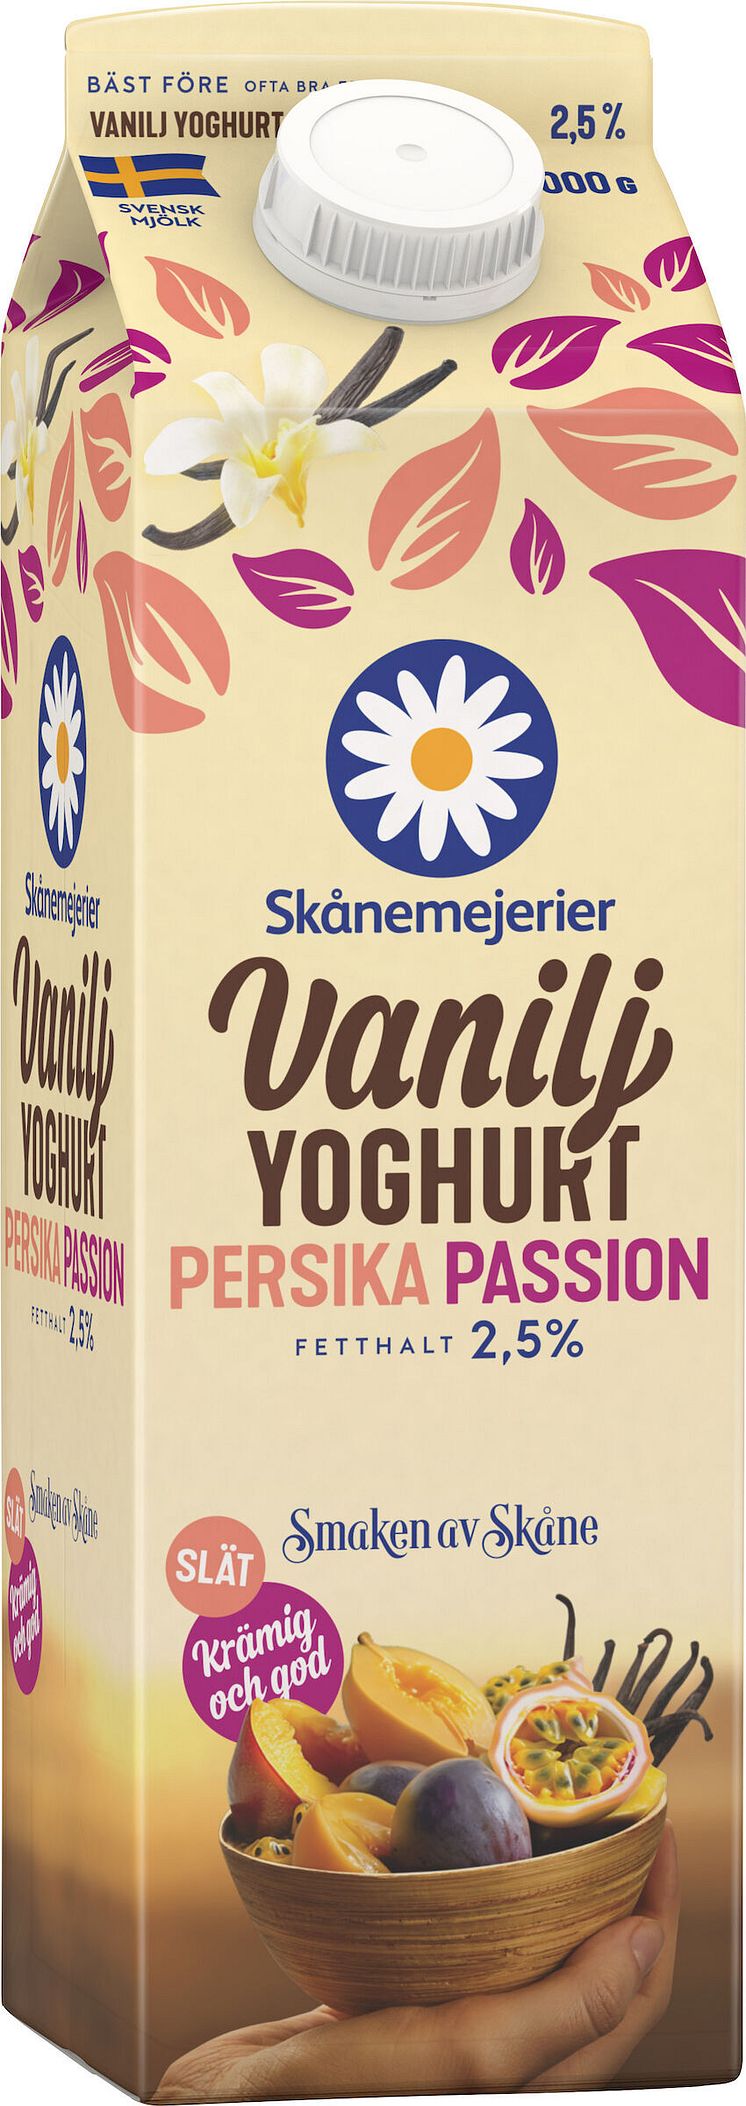 Skånemejerier vaniljyoghurt persika passion.jpg